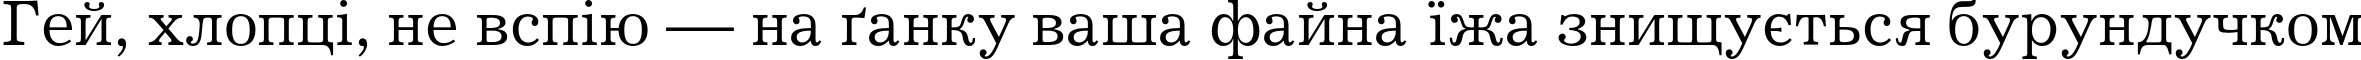 Пример написания шрифтом JournalC текста на украинском